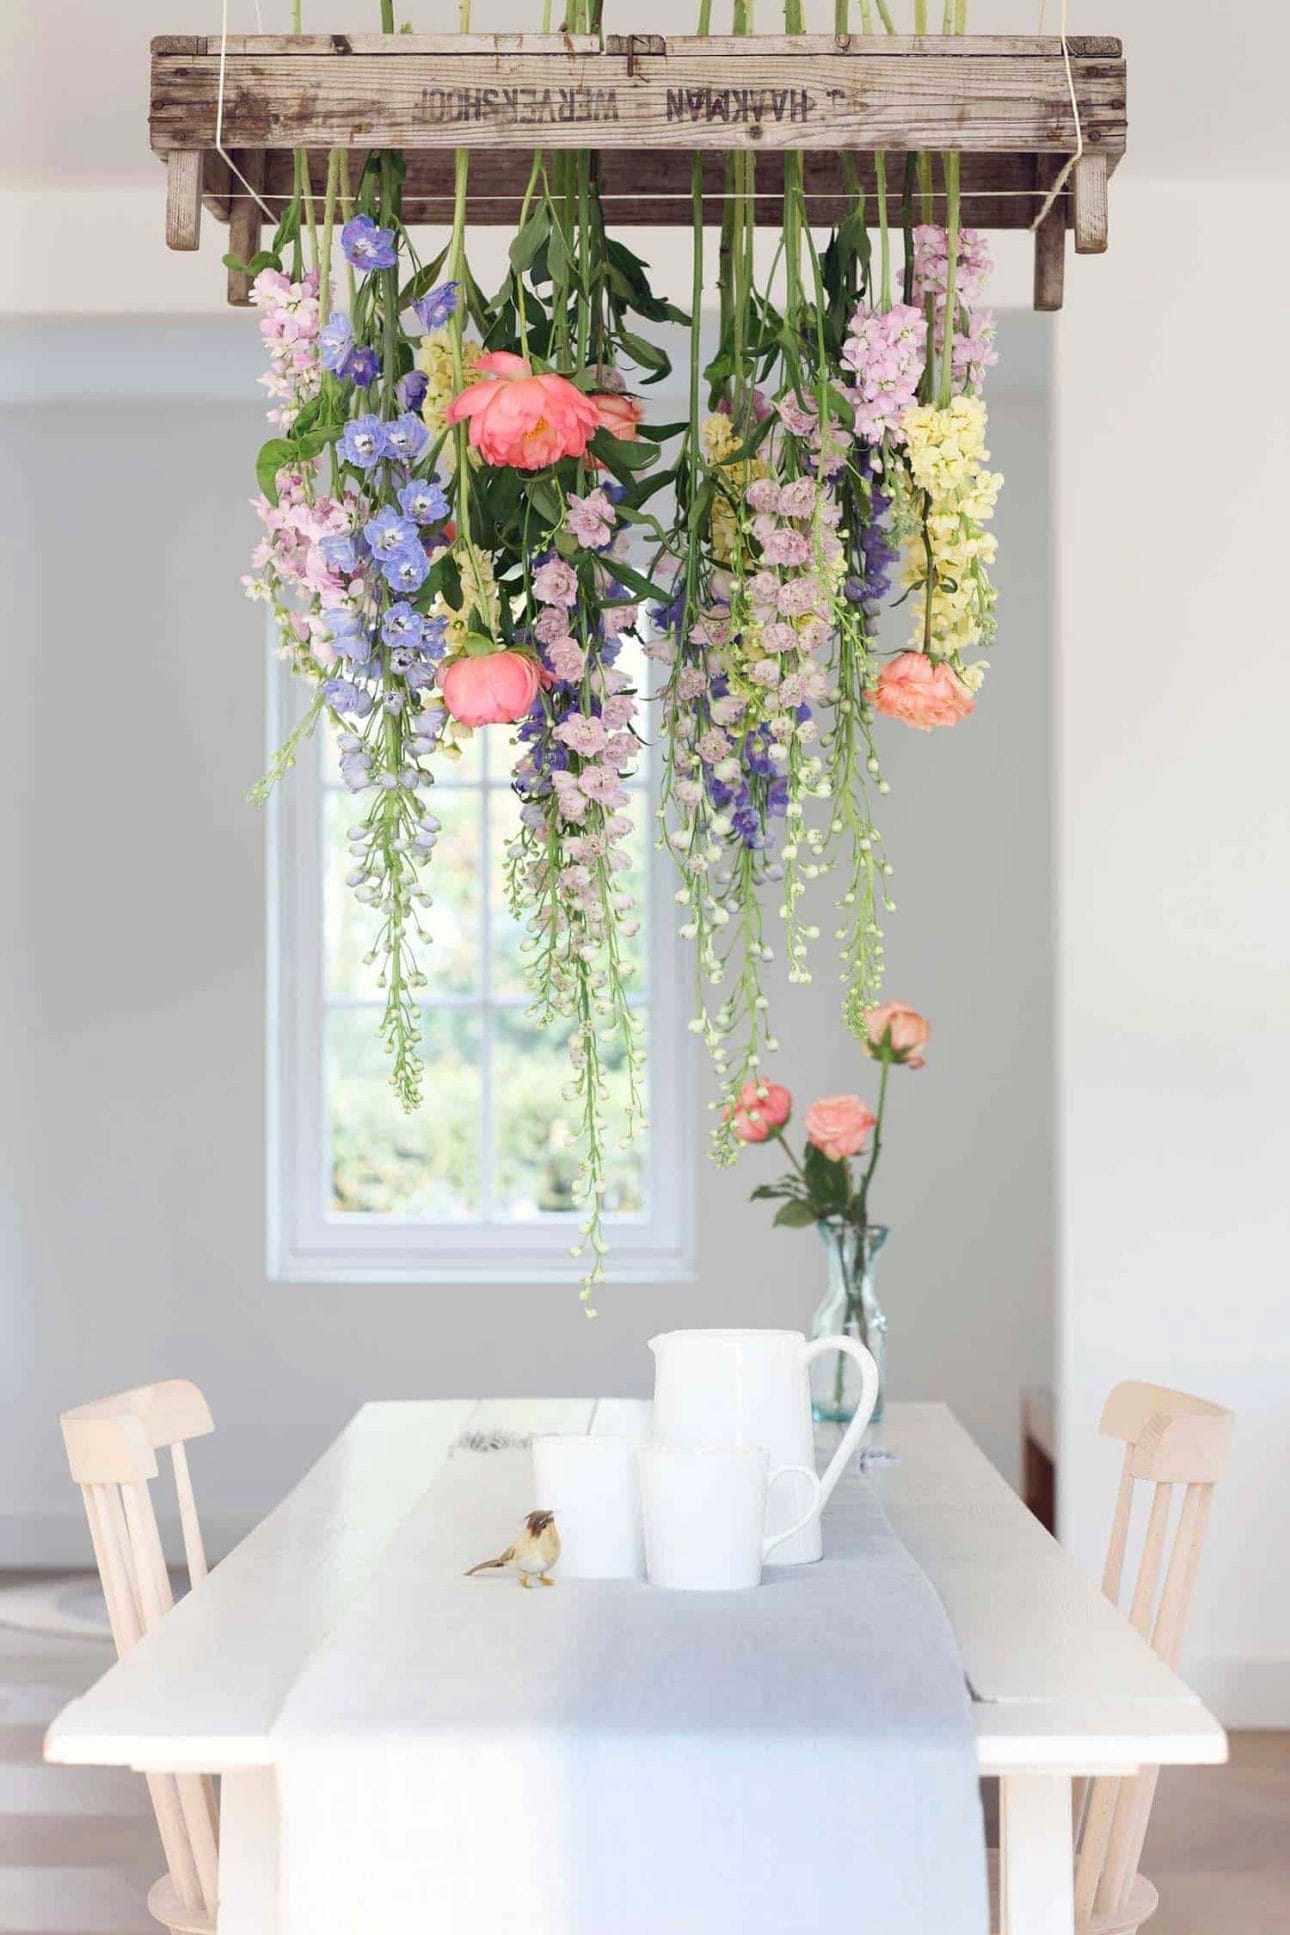 Snow White’s Cottage-Inspired Floral Arrangement